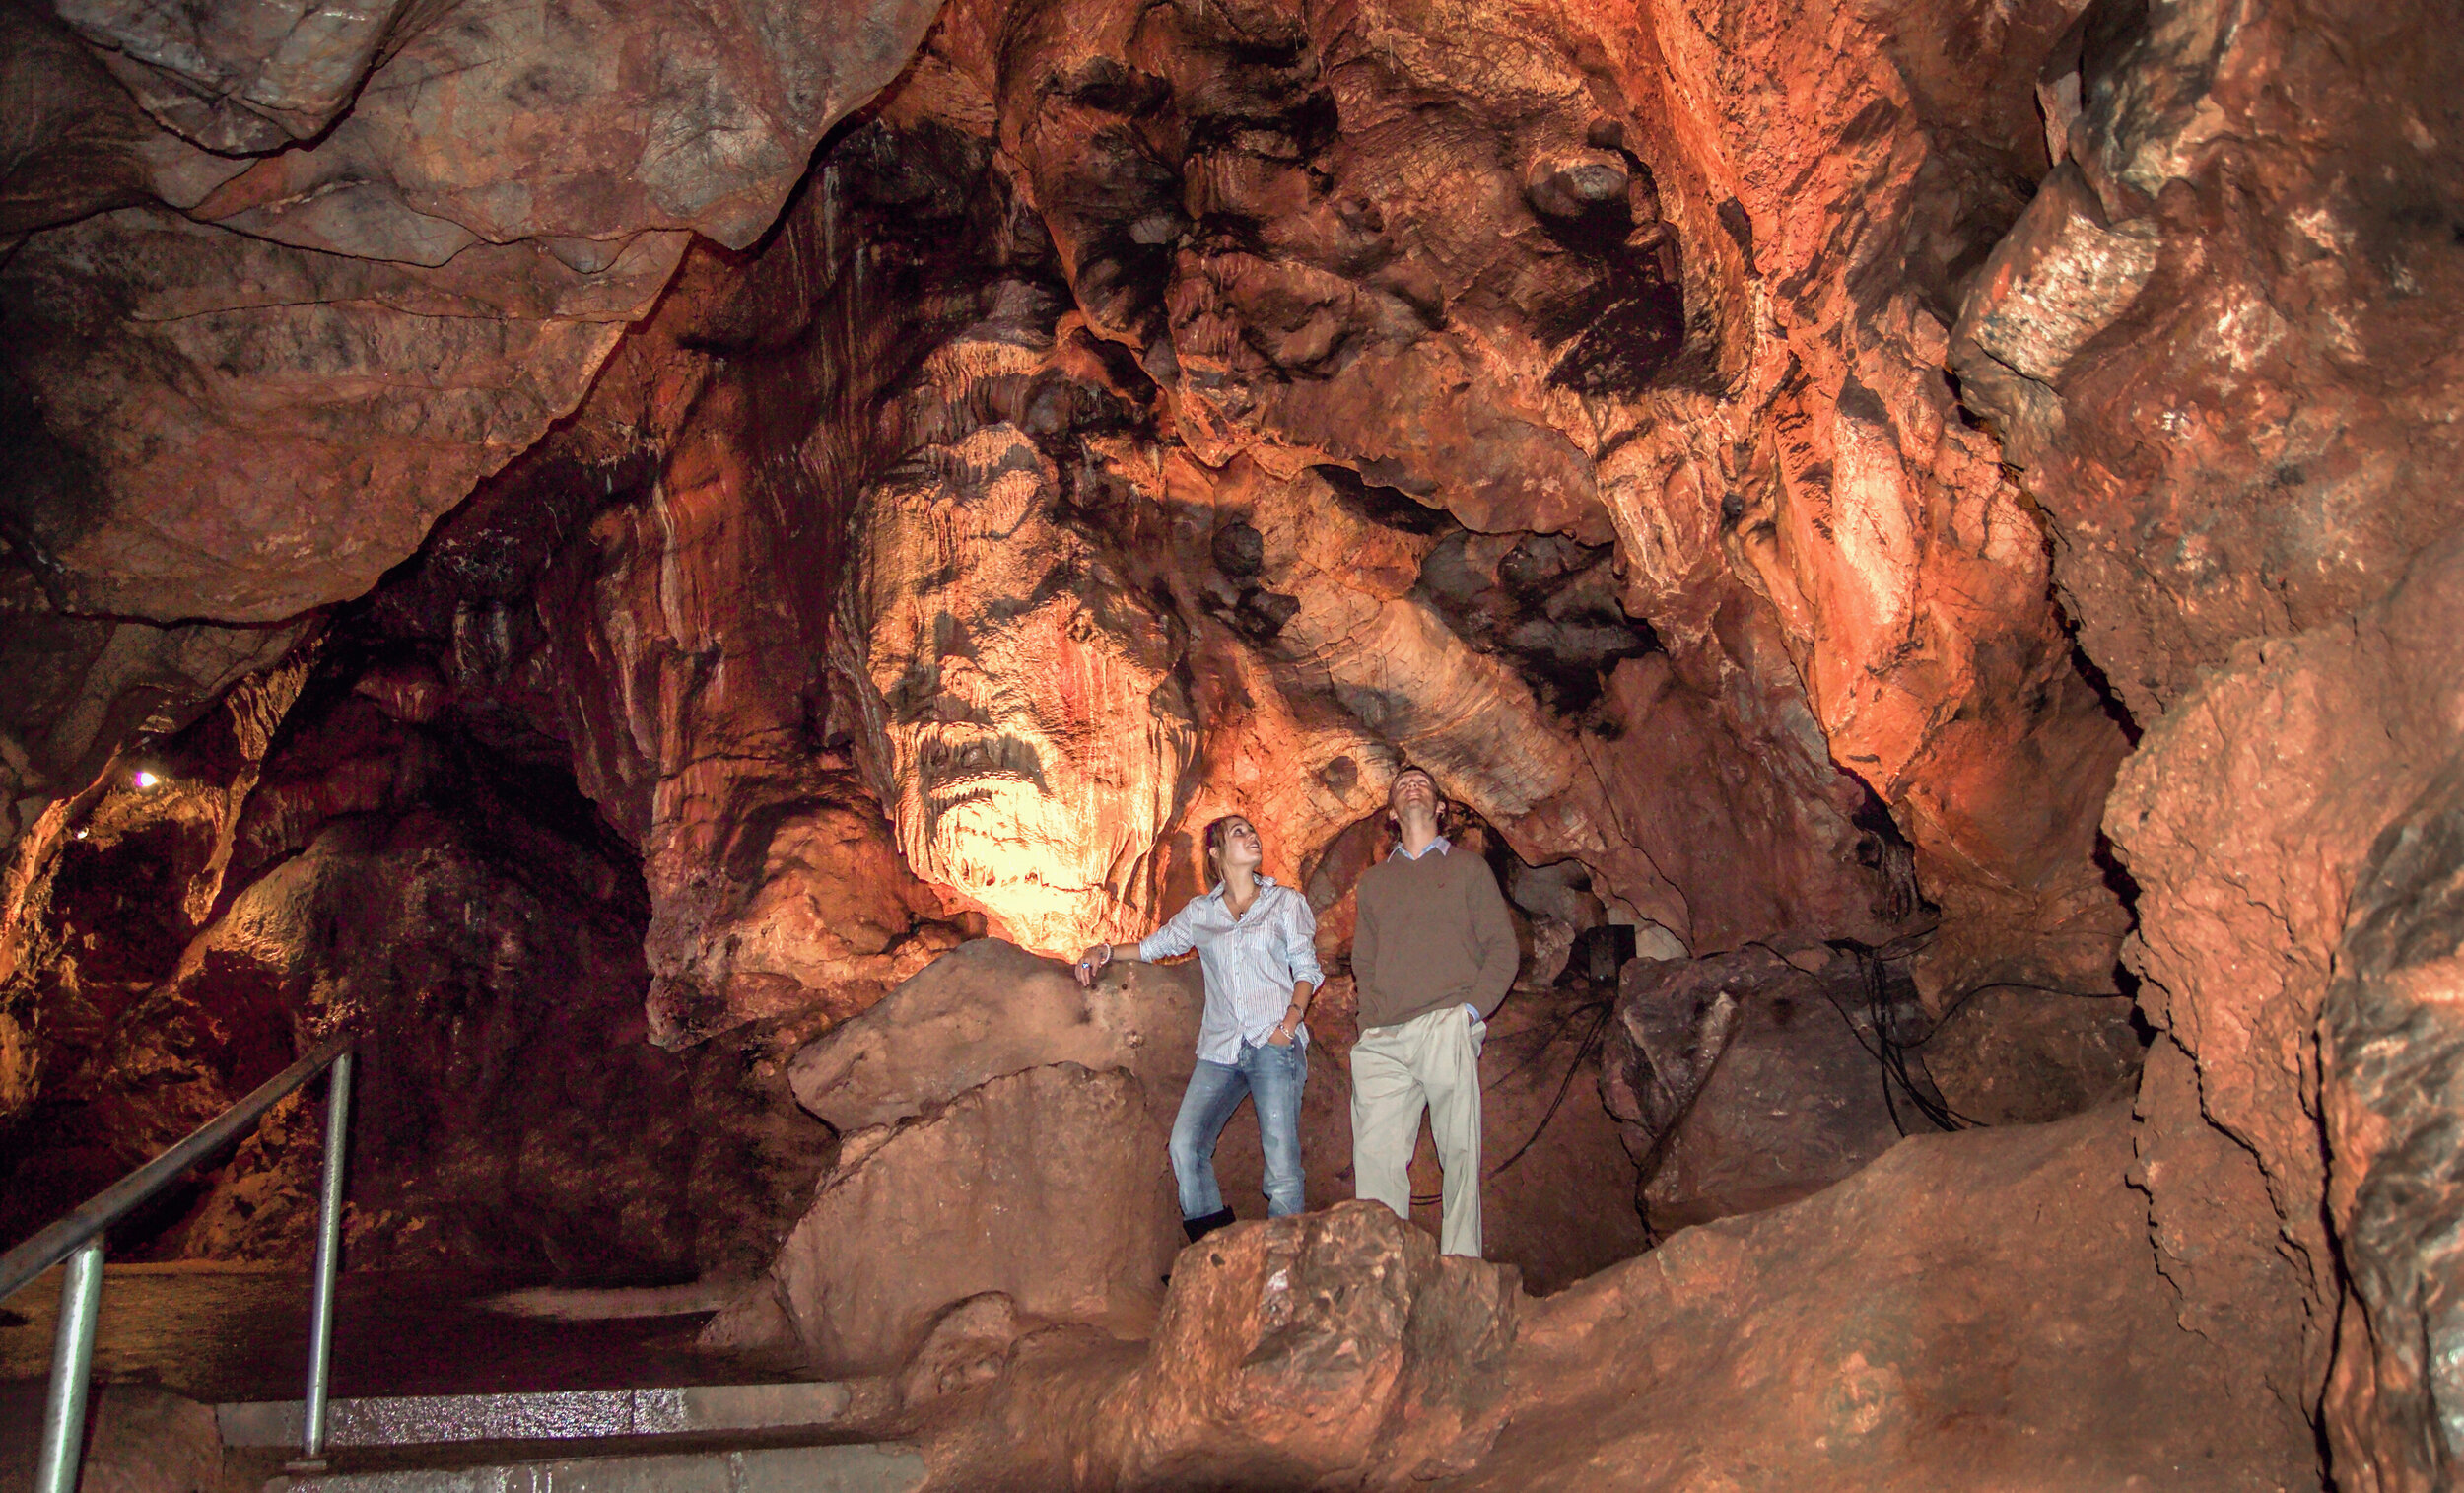 Kents Cavern - 1.4 miles